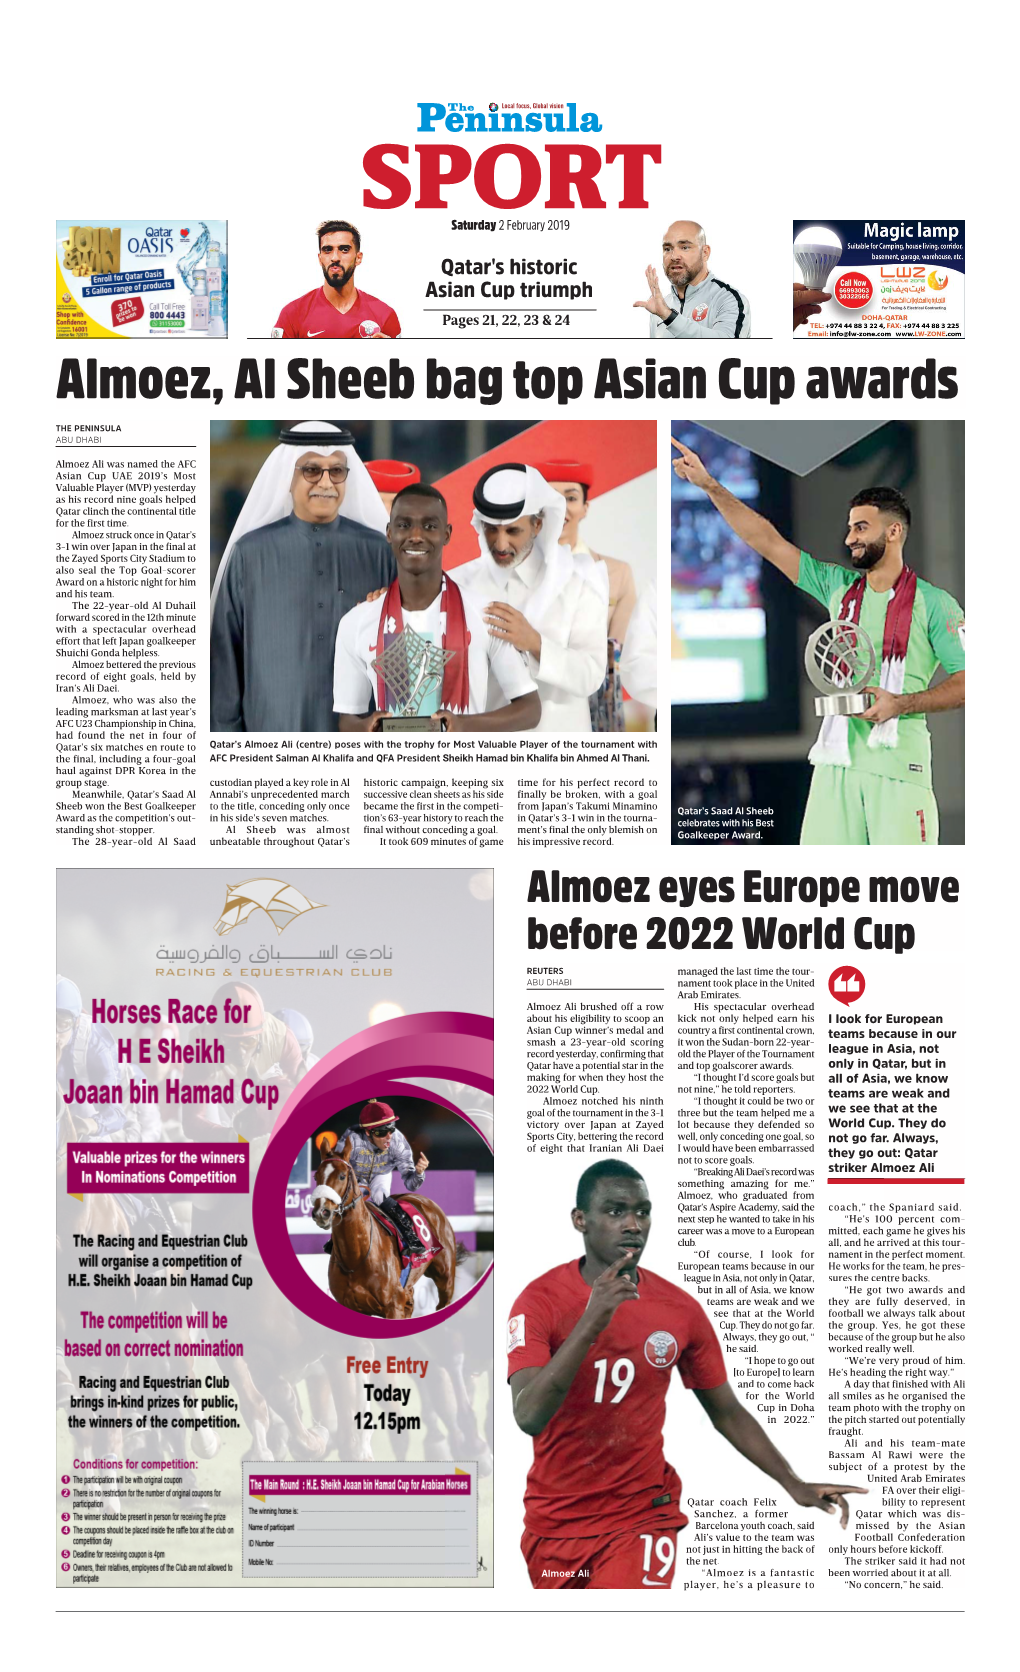 Almoez, Al Sheeb Bag Top Asian Cup Awards